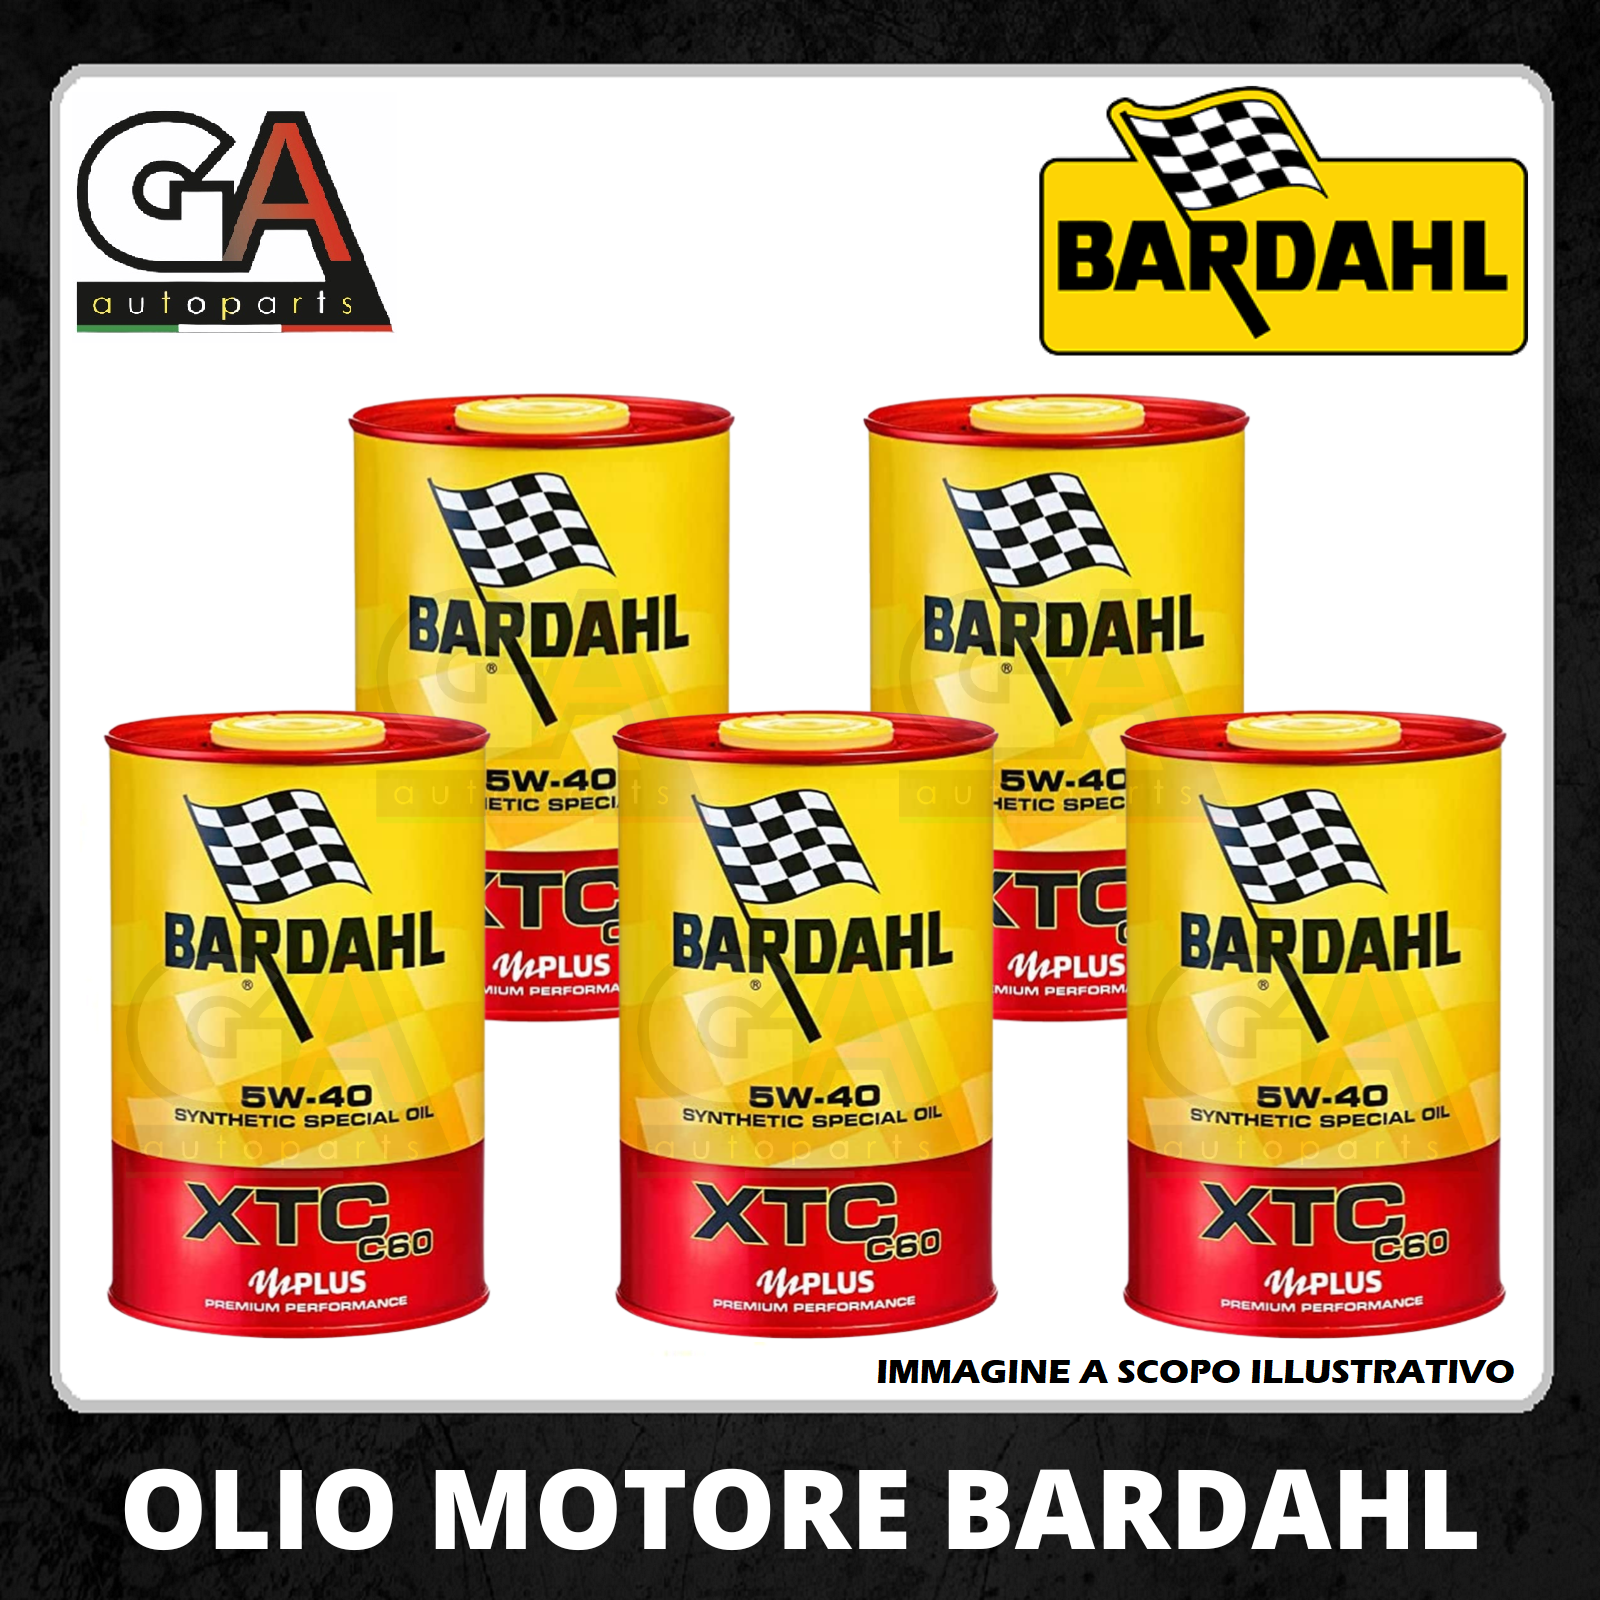 Olio Motore Auto Bardahl XTC C60 5w40 Polarplus Fullrene 100% Sintetico 5  litri - Ricambi Auto GAutopartsProdotto